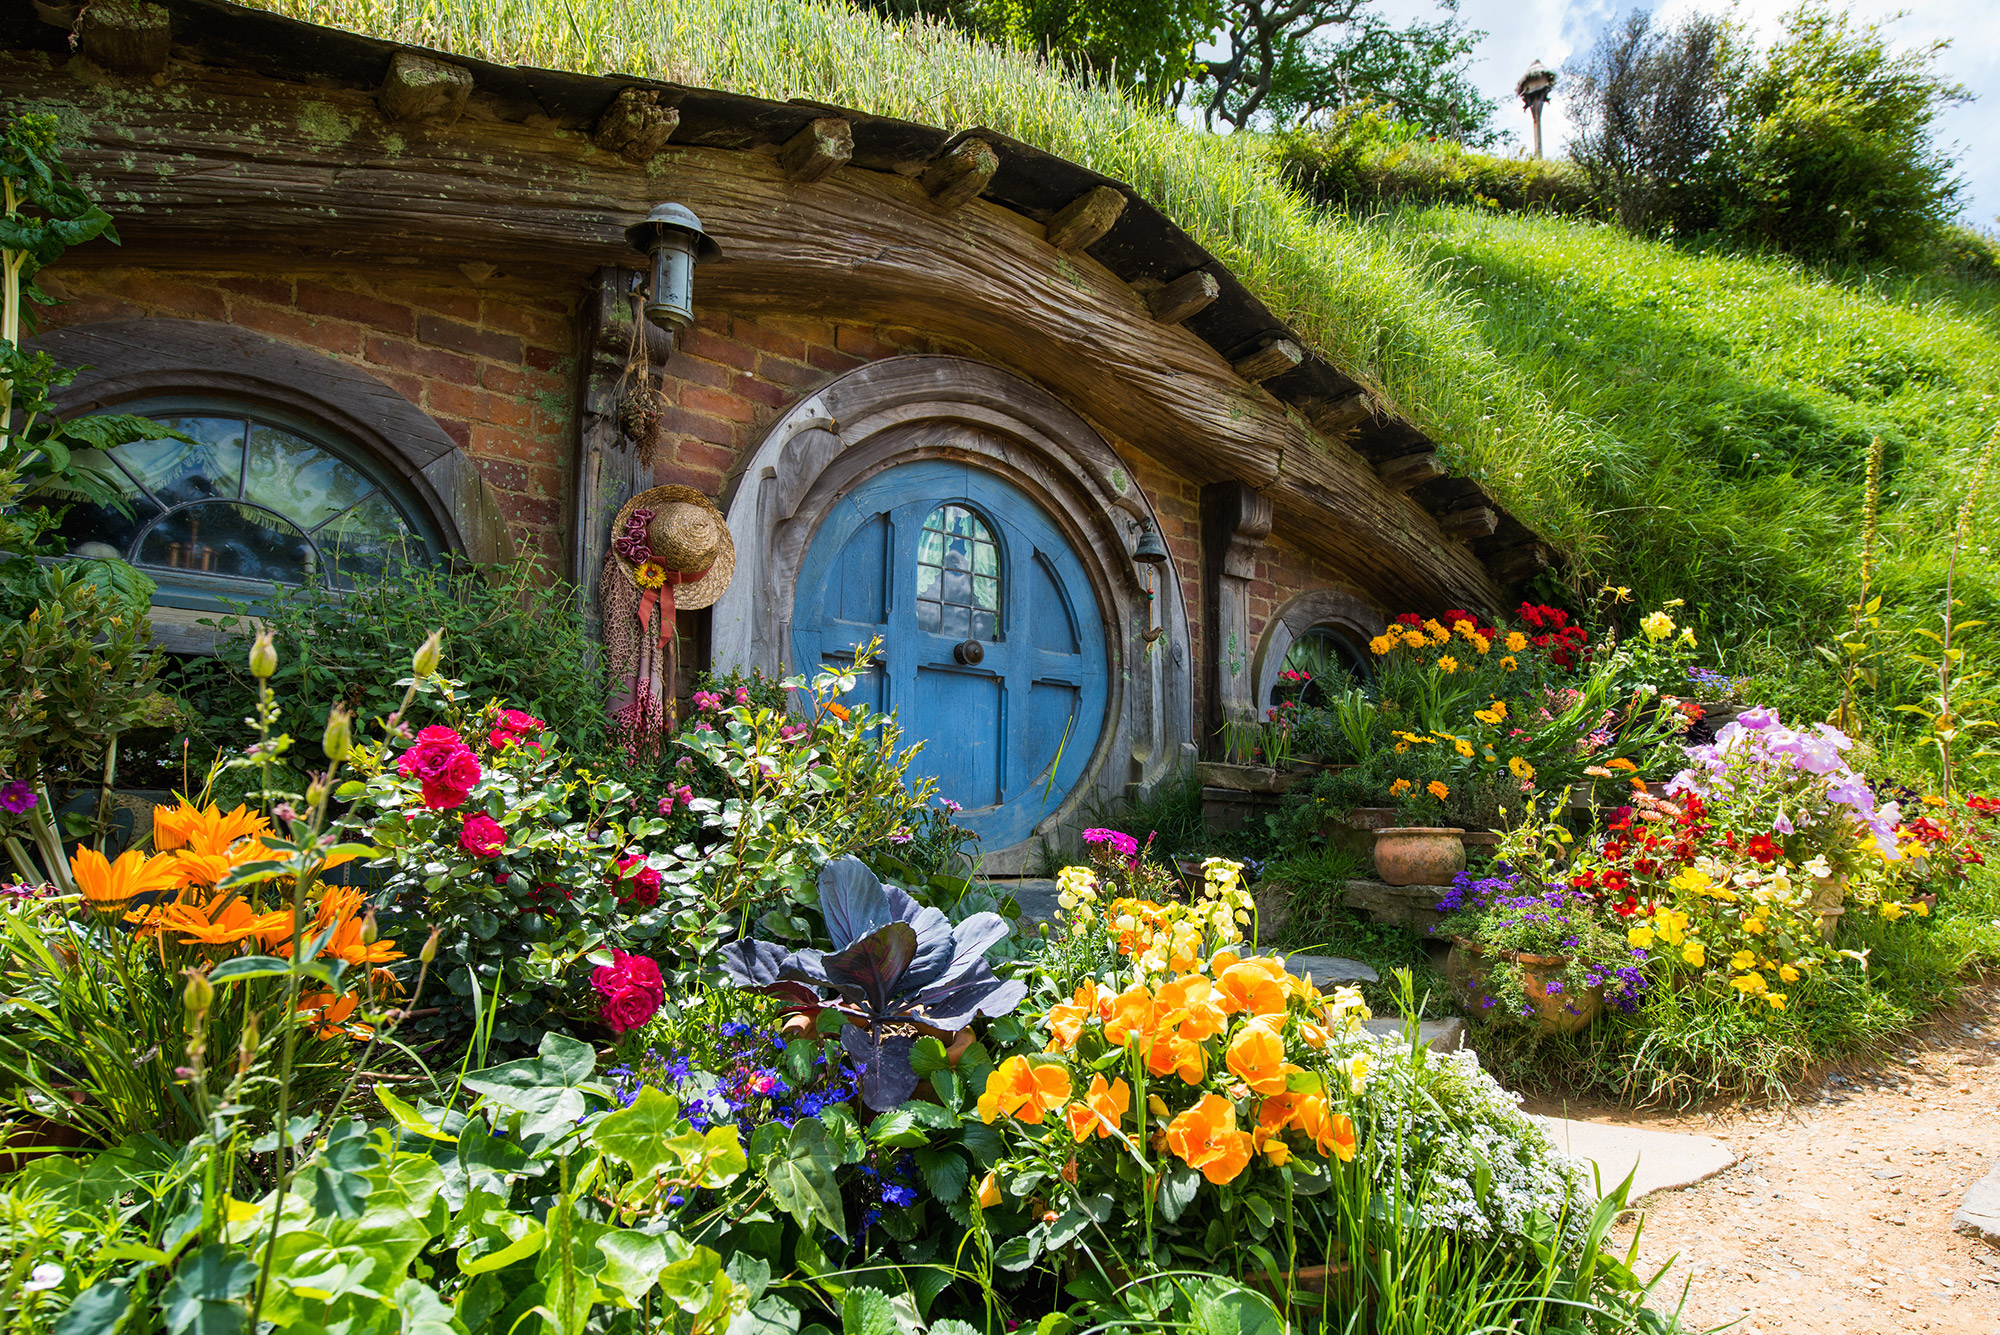 A hobbit home on the Hobbiton movie set